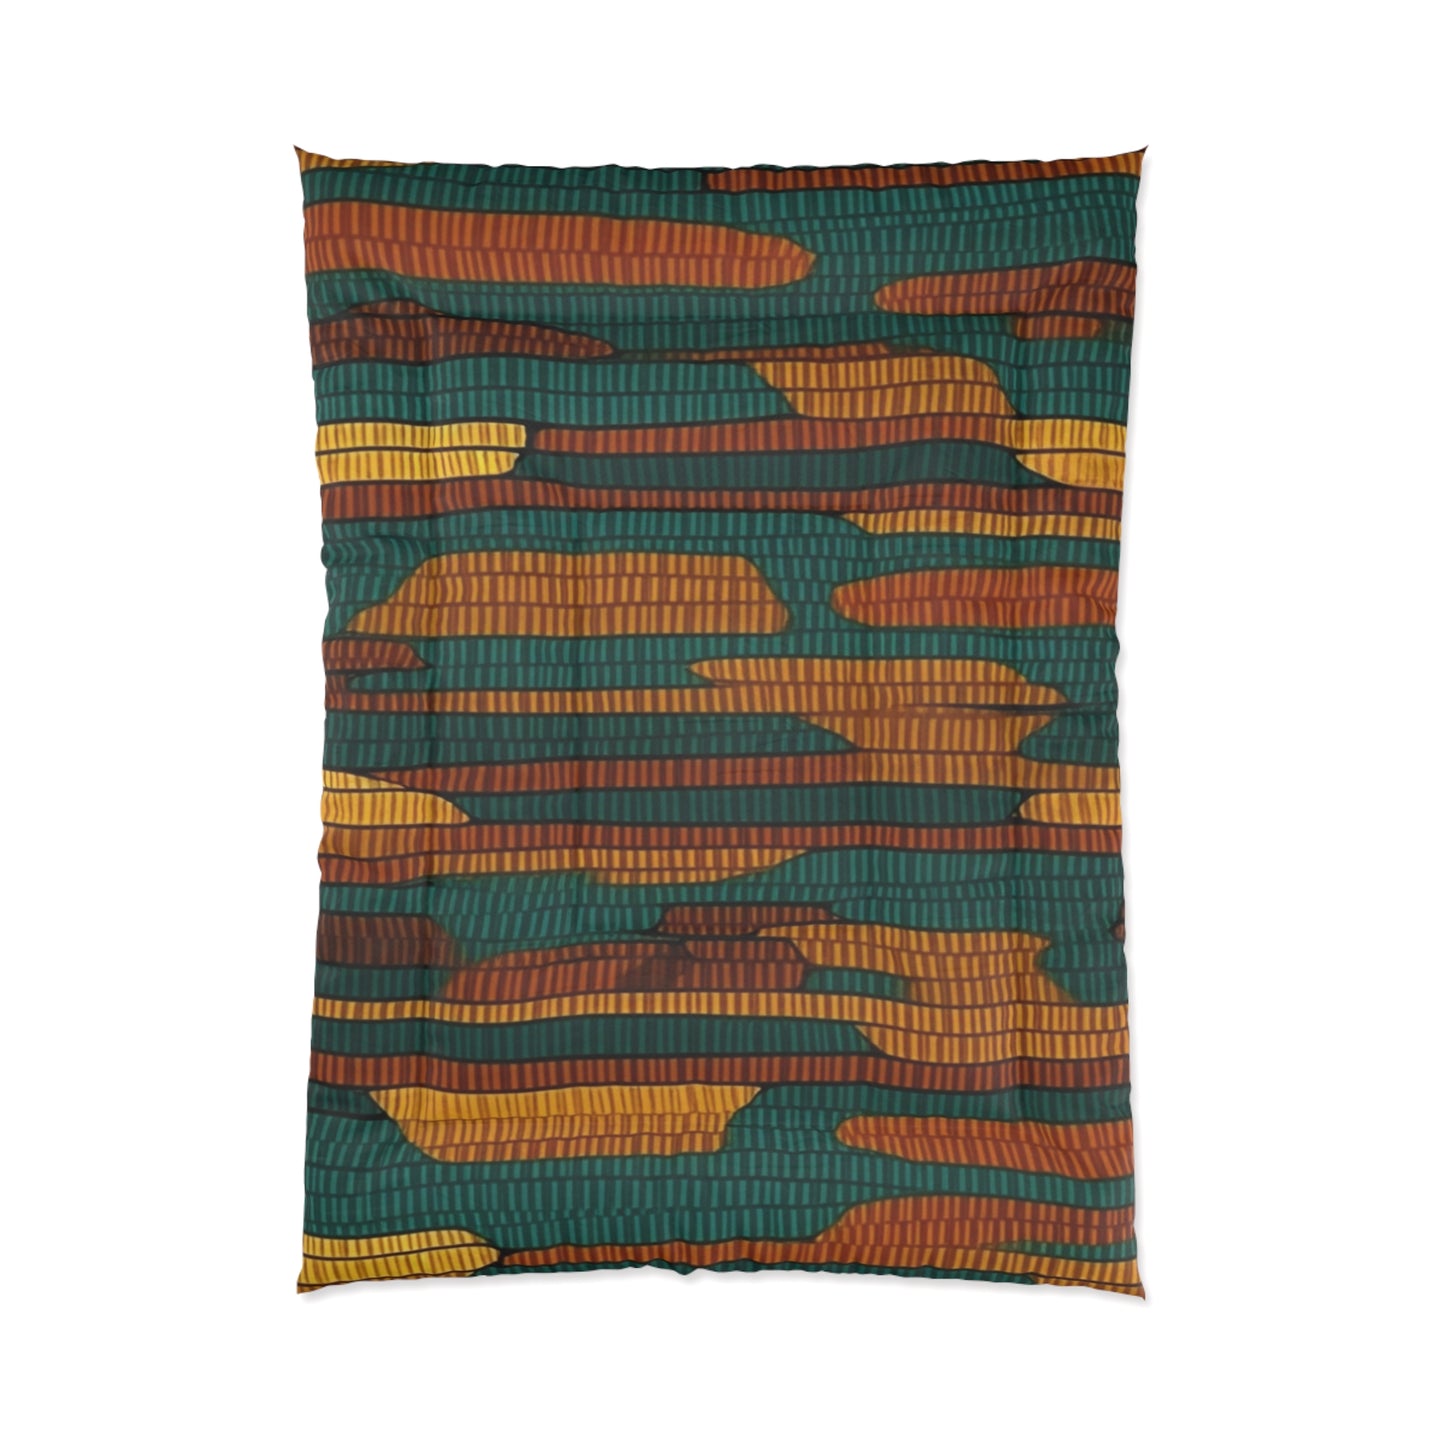 Teal & Dark Yellow Maya 1990's Style Textile Pattern - Intricate, Texture-Rich Art - Comforter